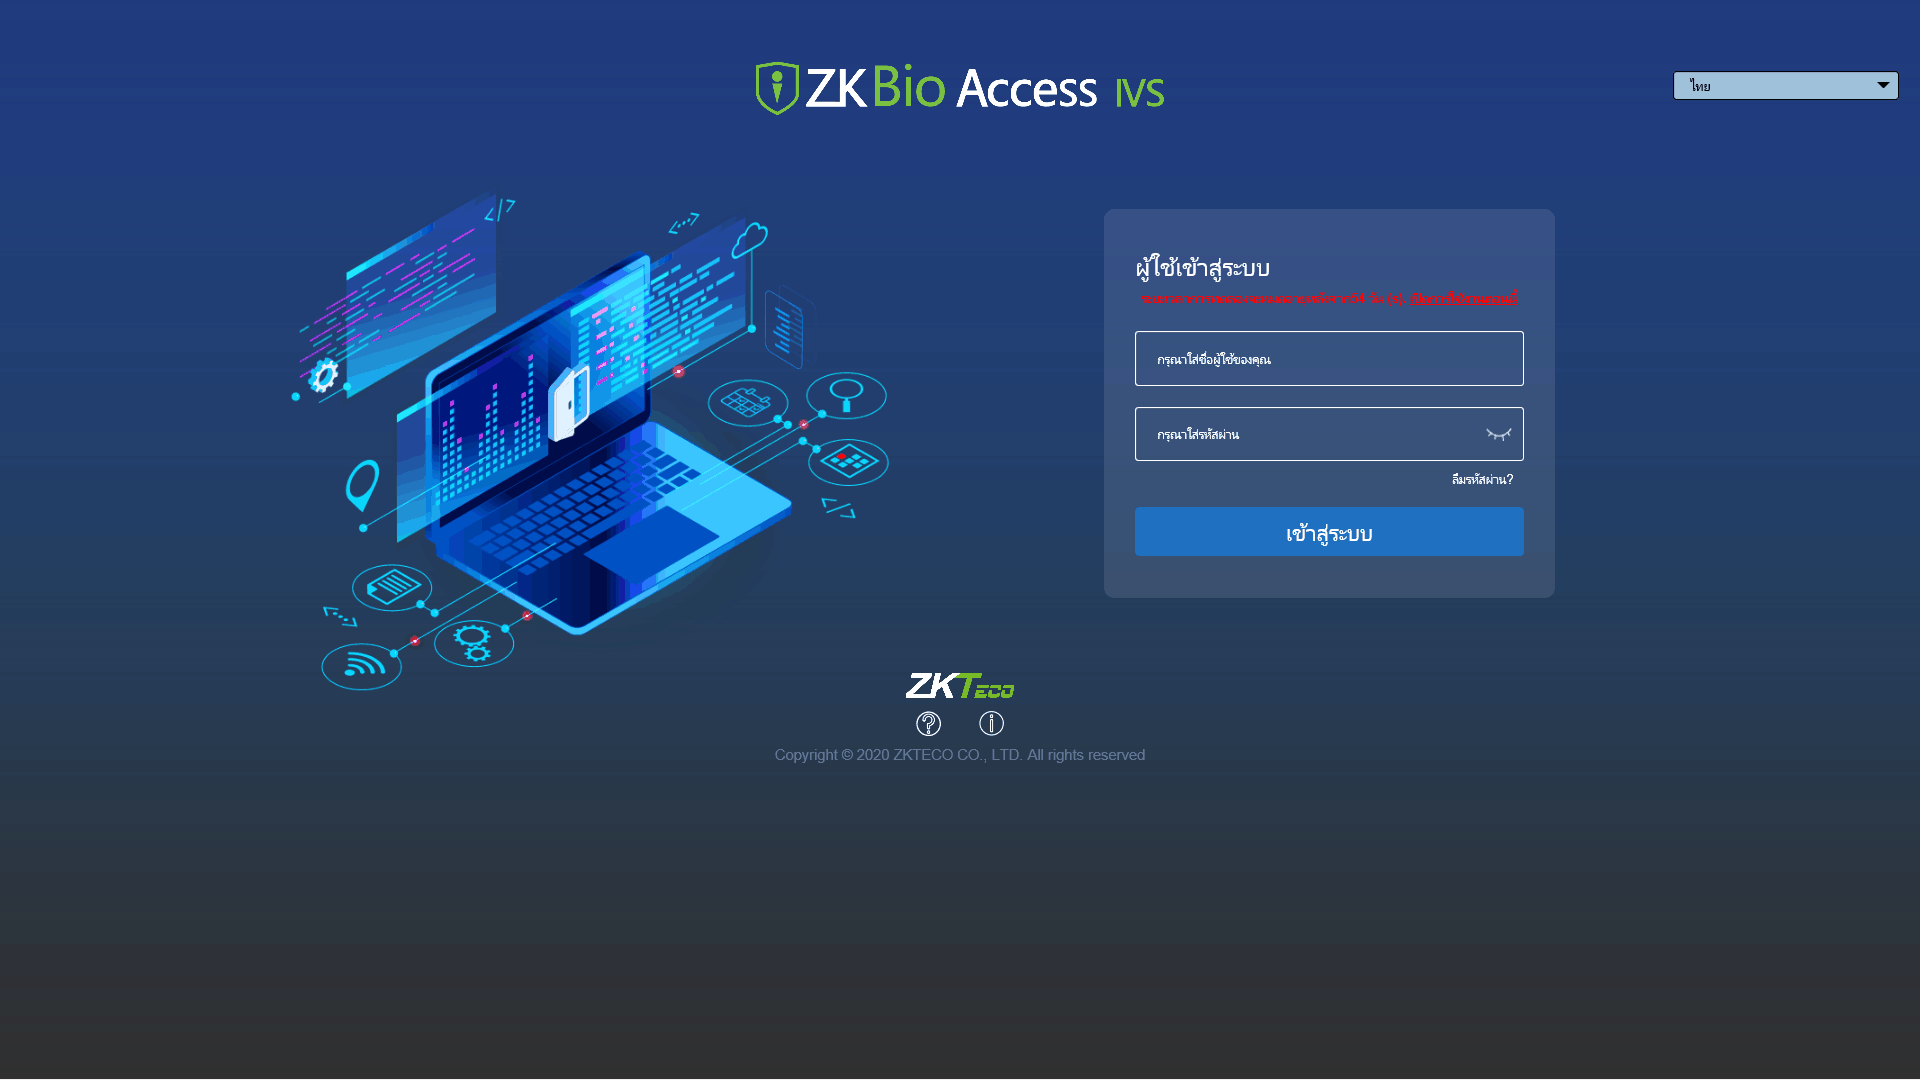 ZKBioAccess IVS